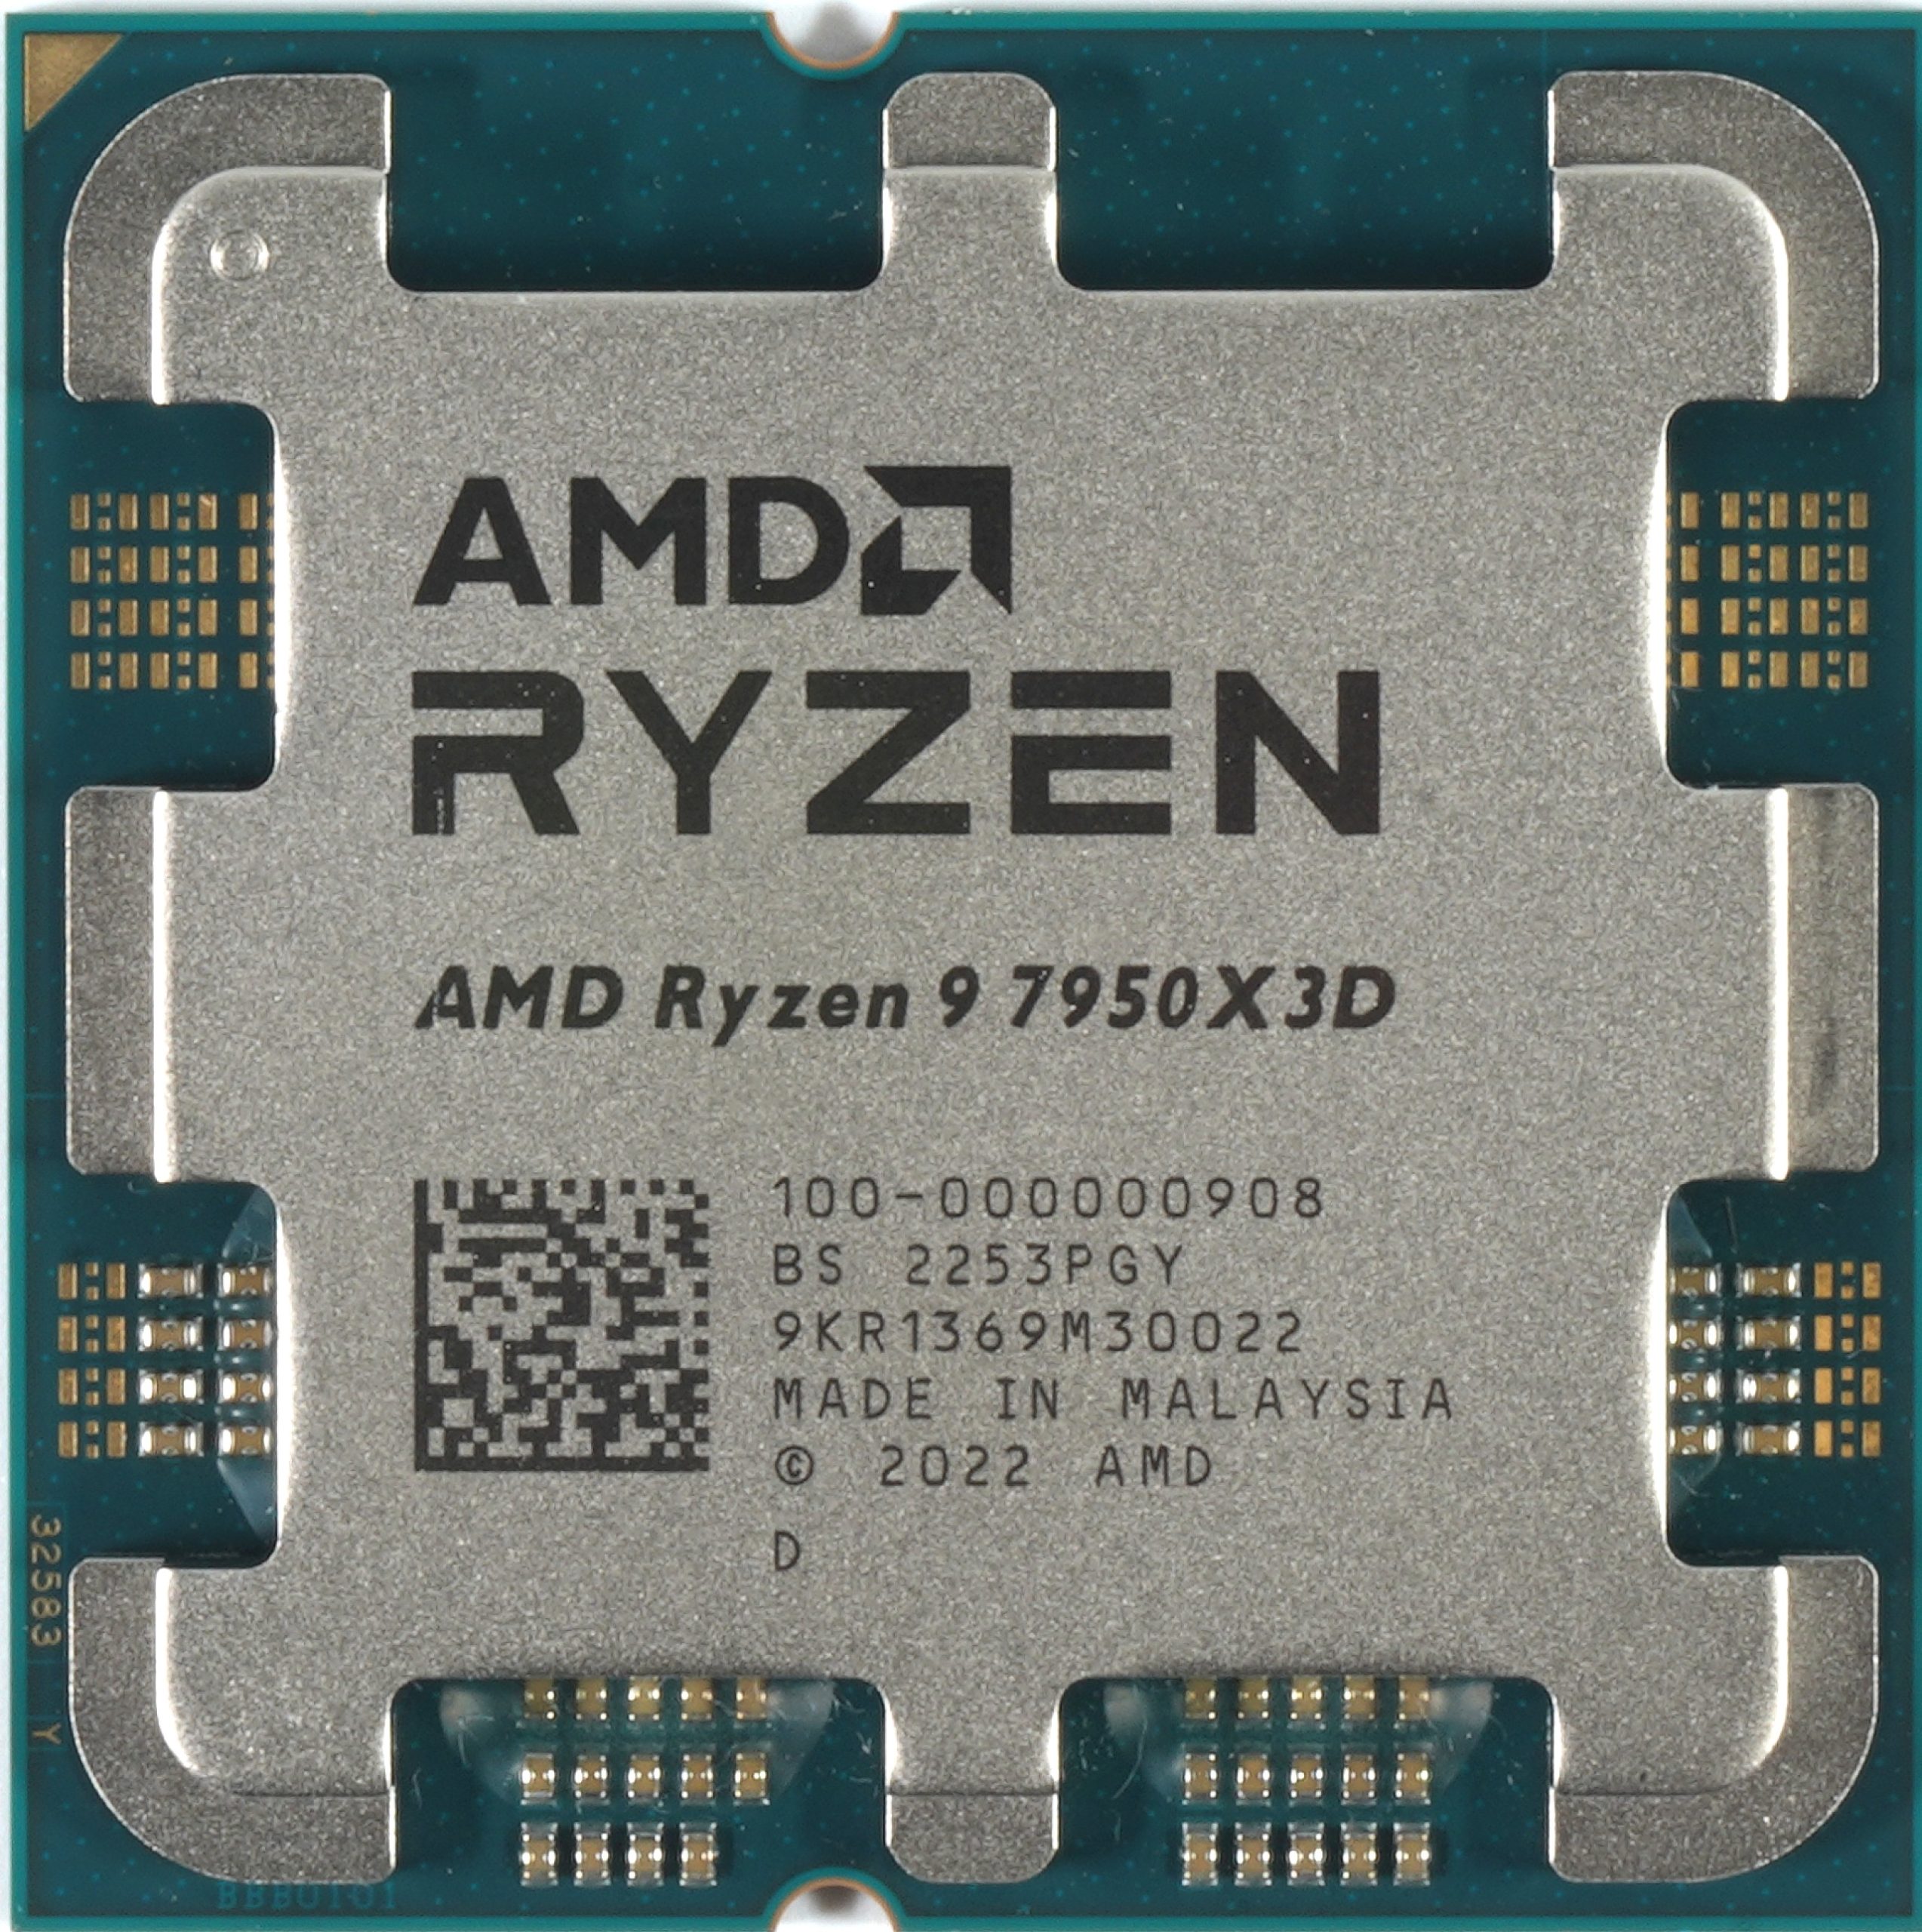 Best CPU For Gaming: AMD Ryzen 9 7950X3D vs Intel Core i9